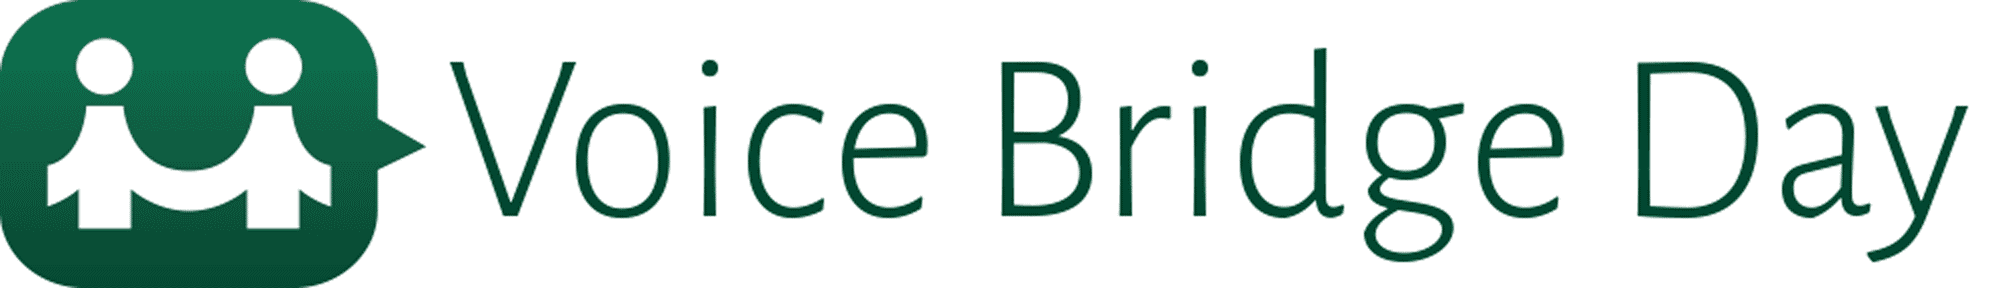 Voice Bridge Day Title & Logo